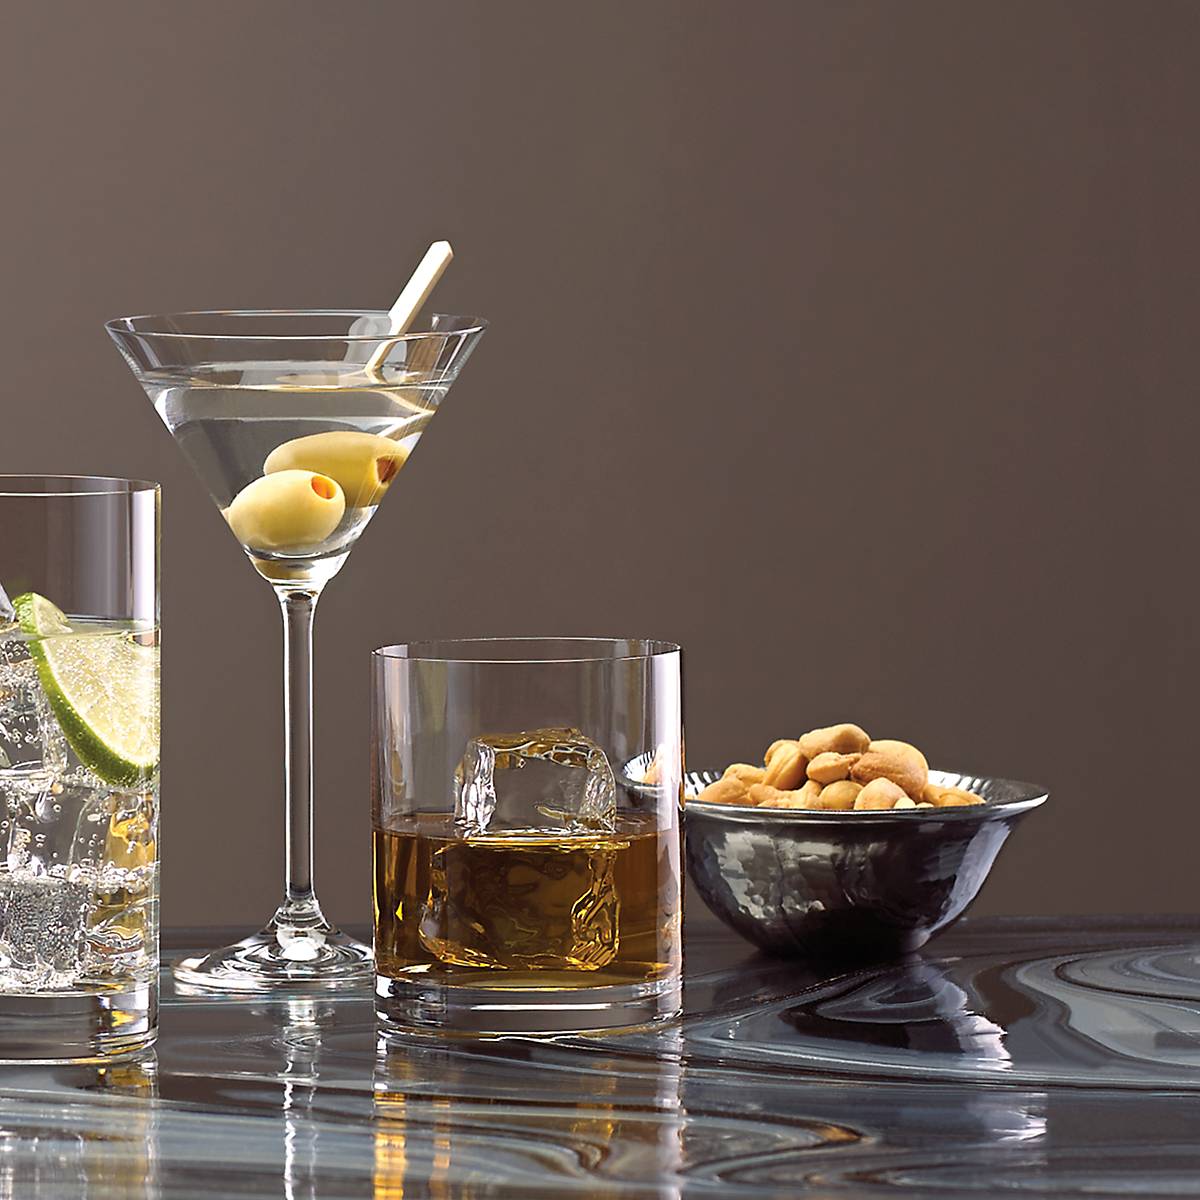 Lenox Tuscany Classics Martini (Set of 4)